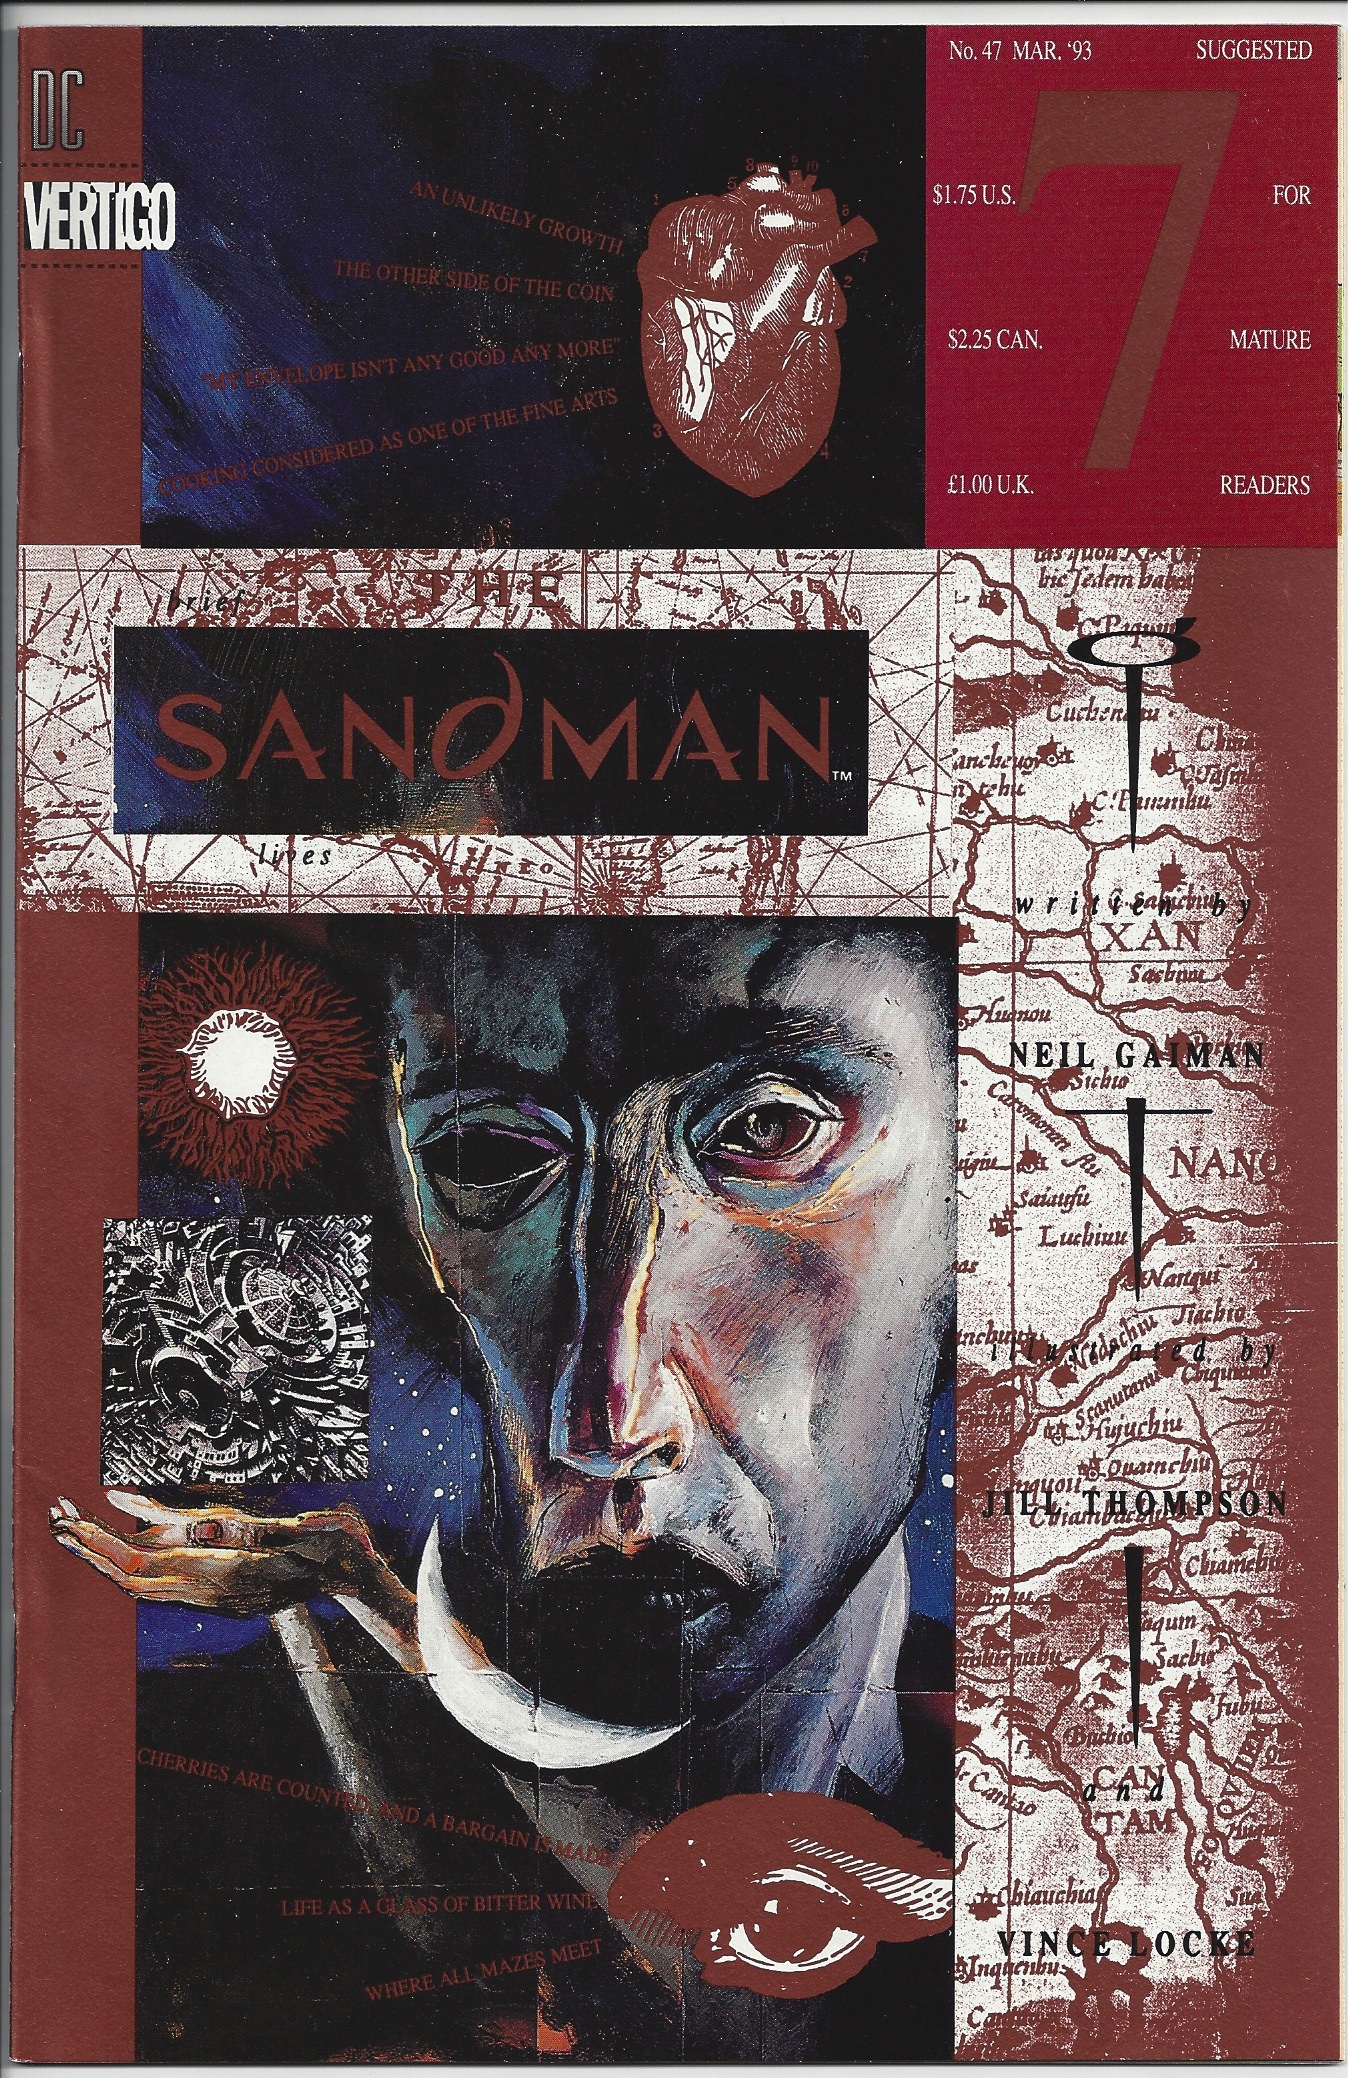 Sandman (vol. 2) Issue 47